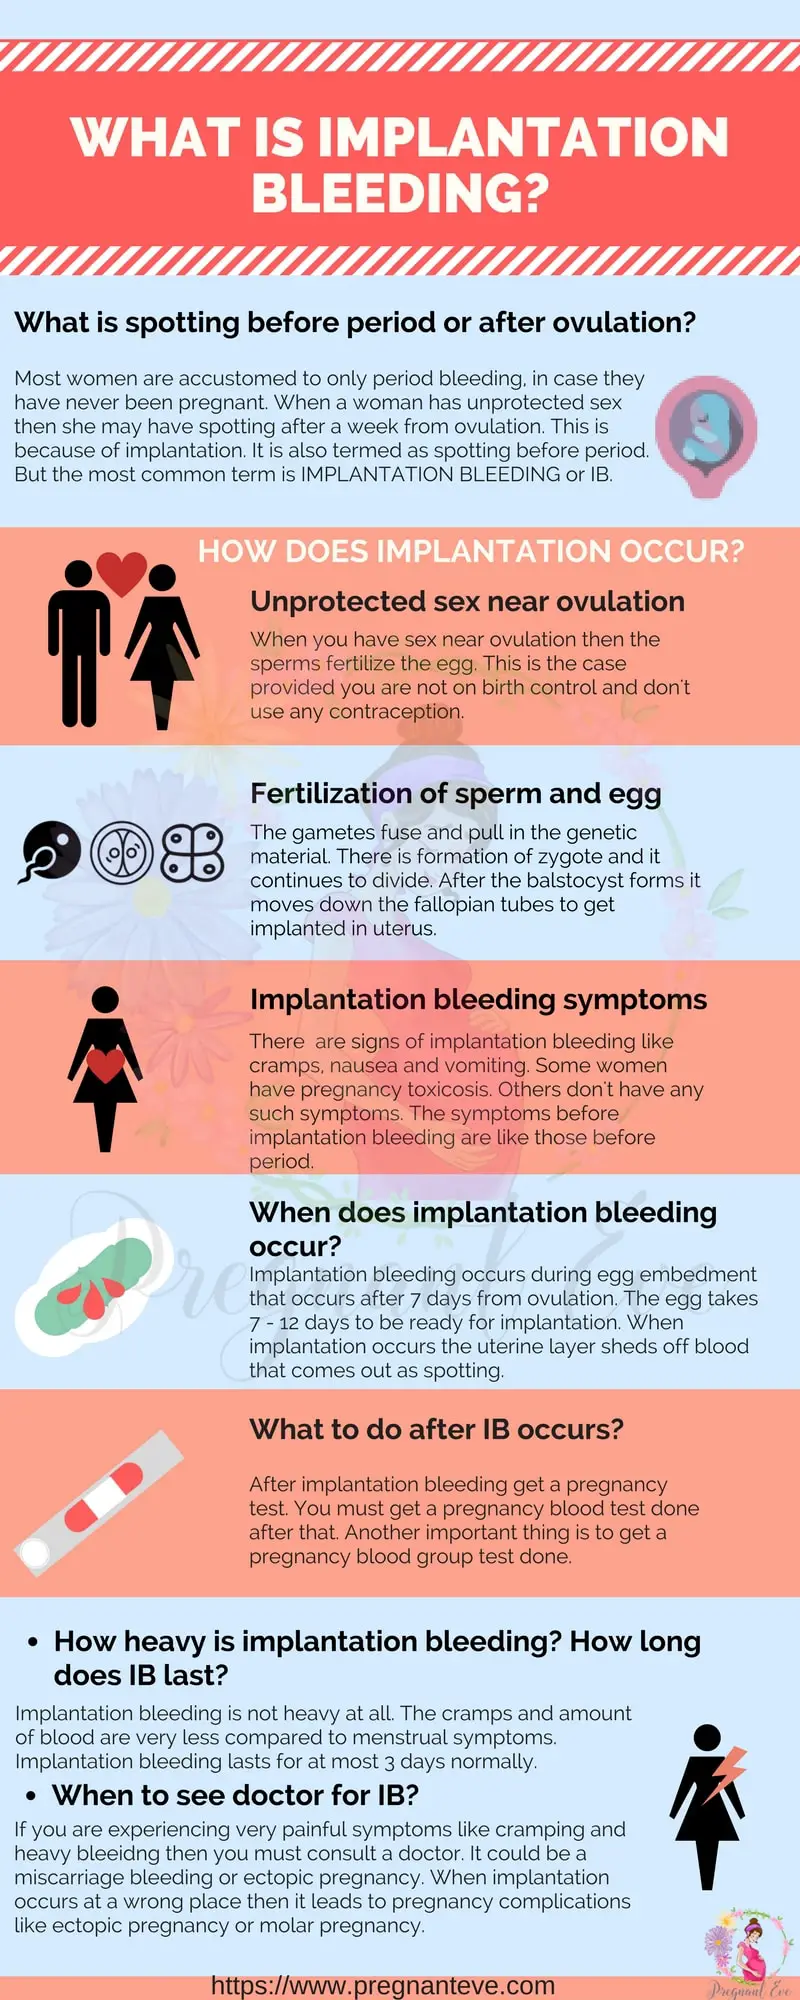 What is implantation bleeding?